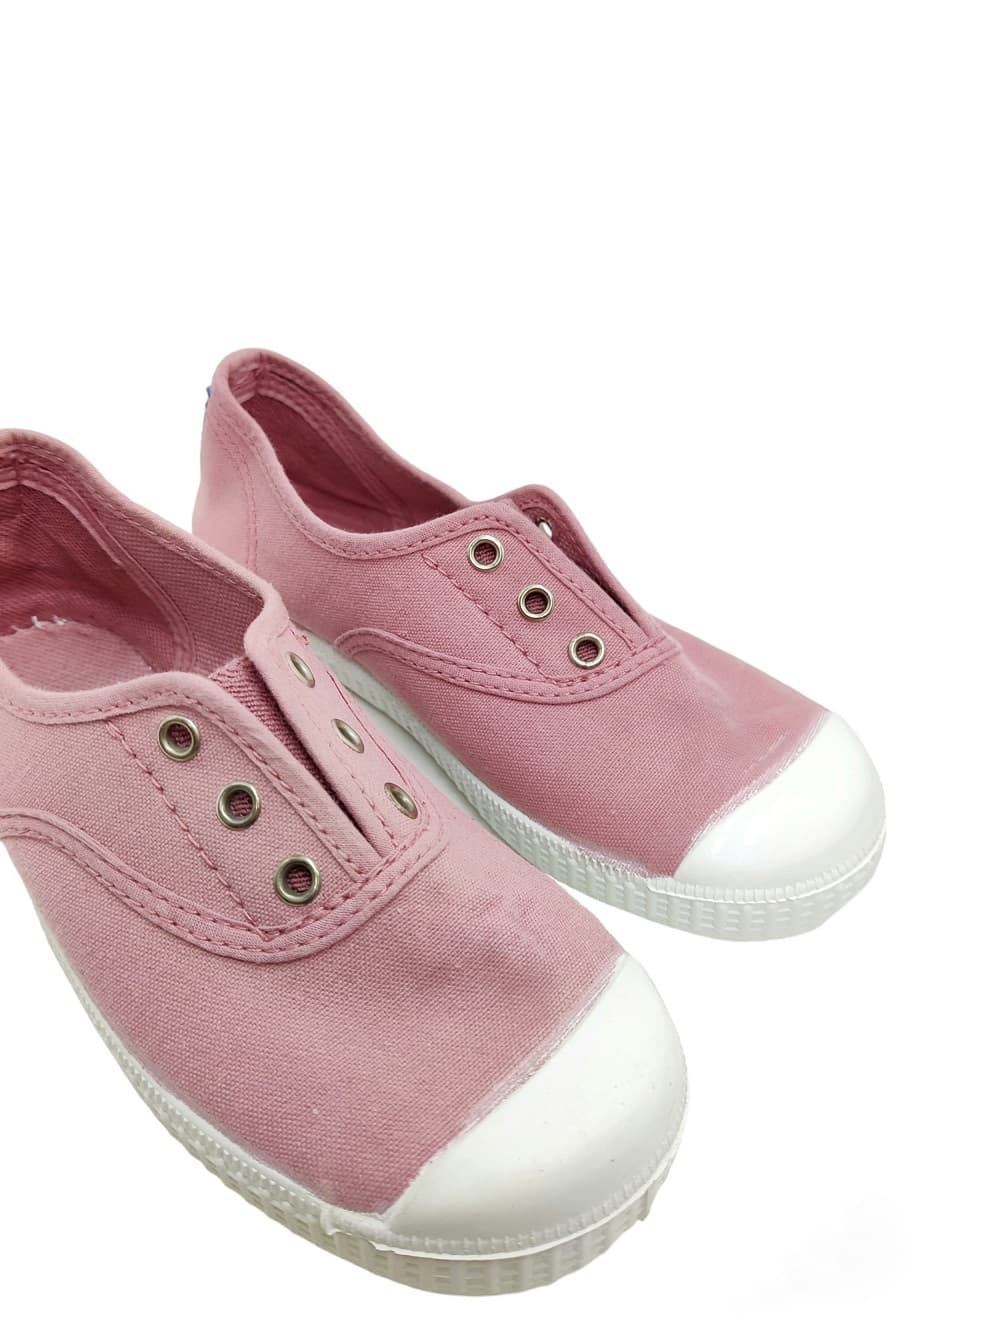 La Cadena Children's Sneakers Pale Pink Canvas with Toe - Image 4